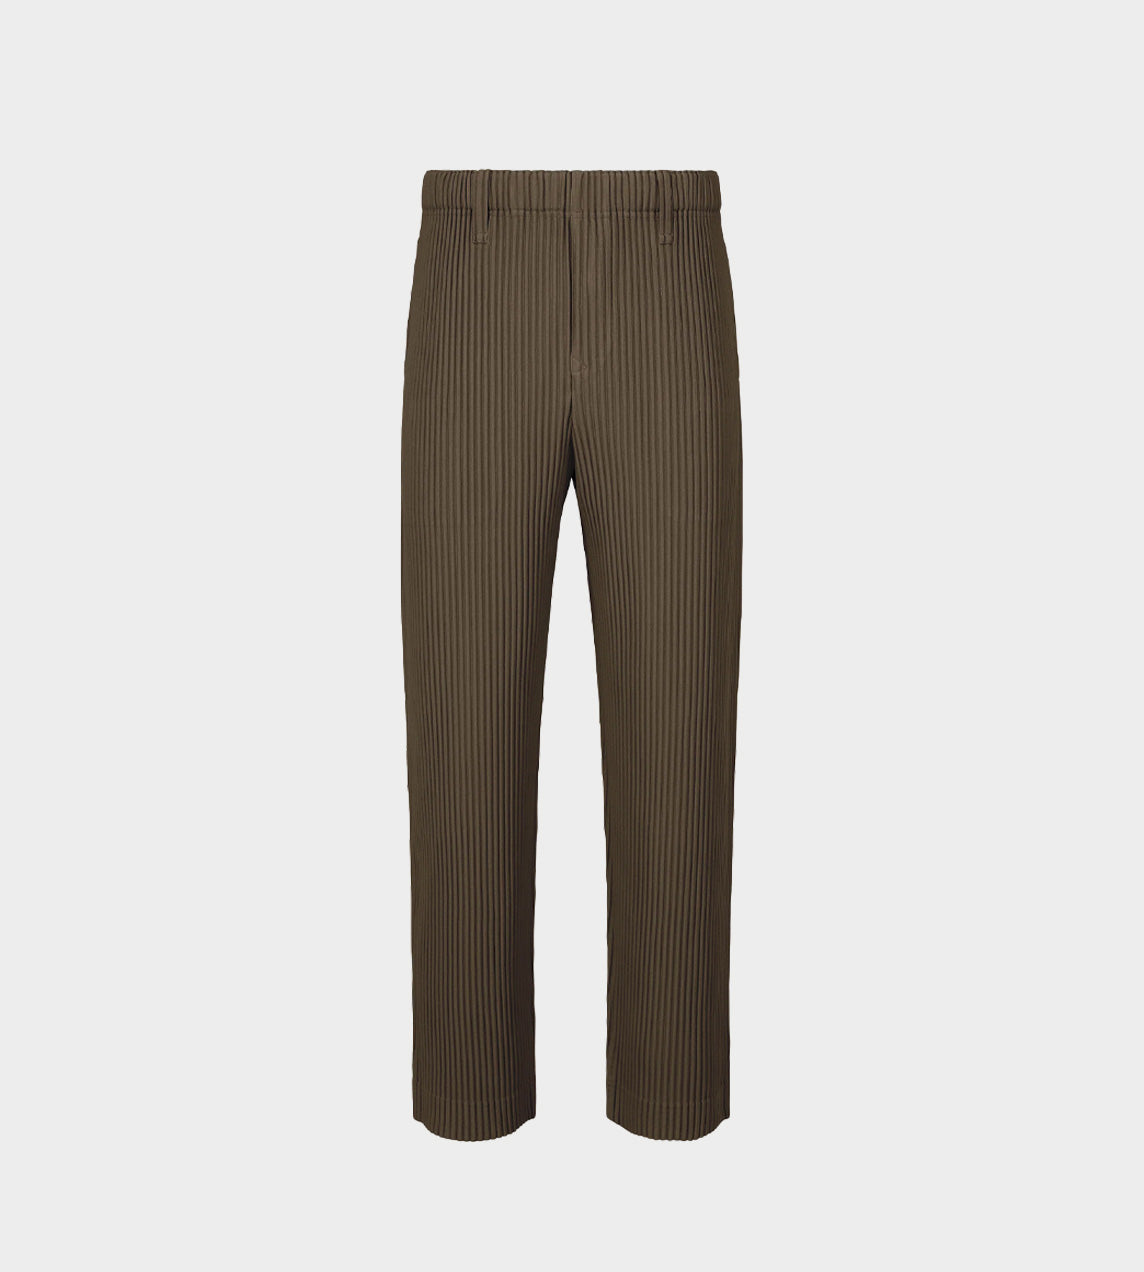 Homme Plisse Issey Miyake - Tailored Pleats Pants D.Khaki